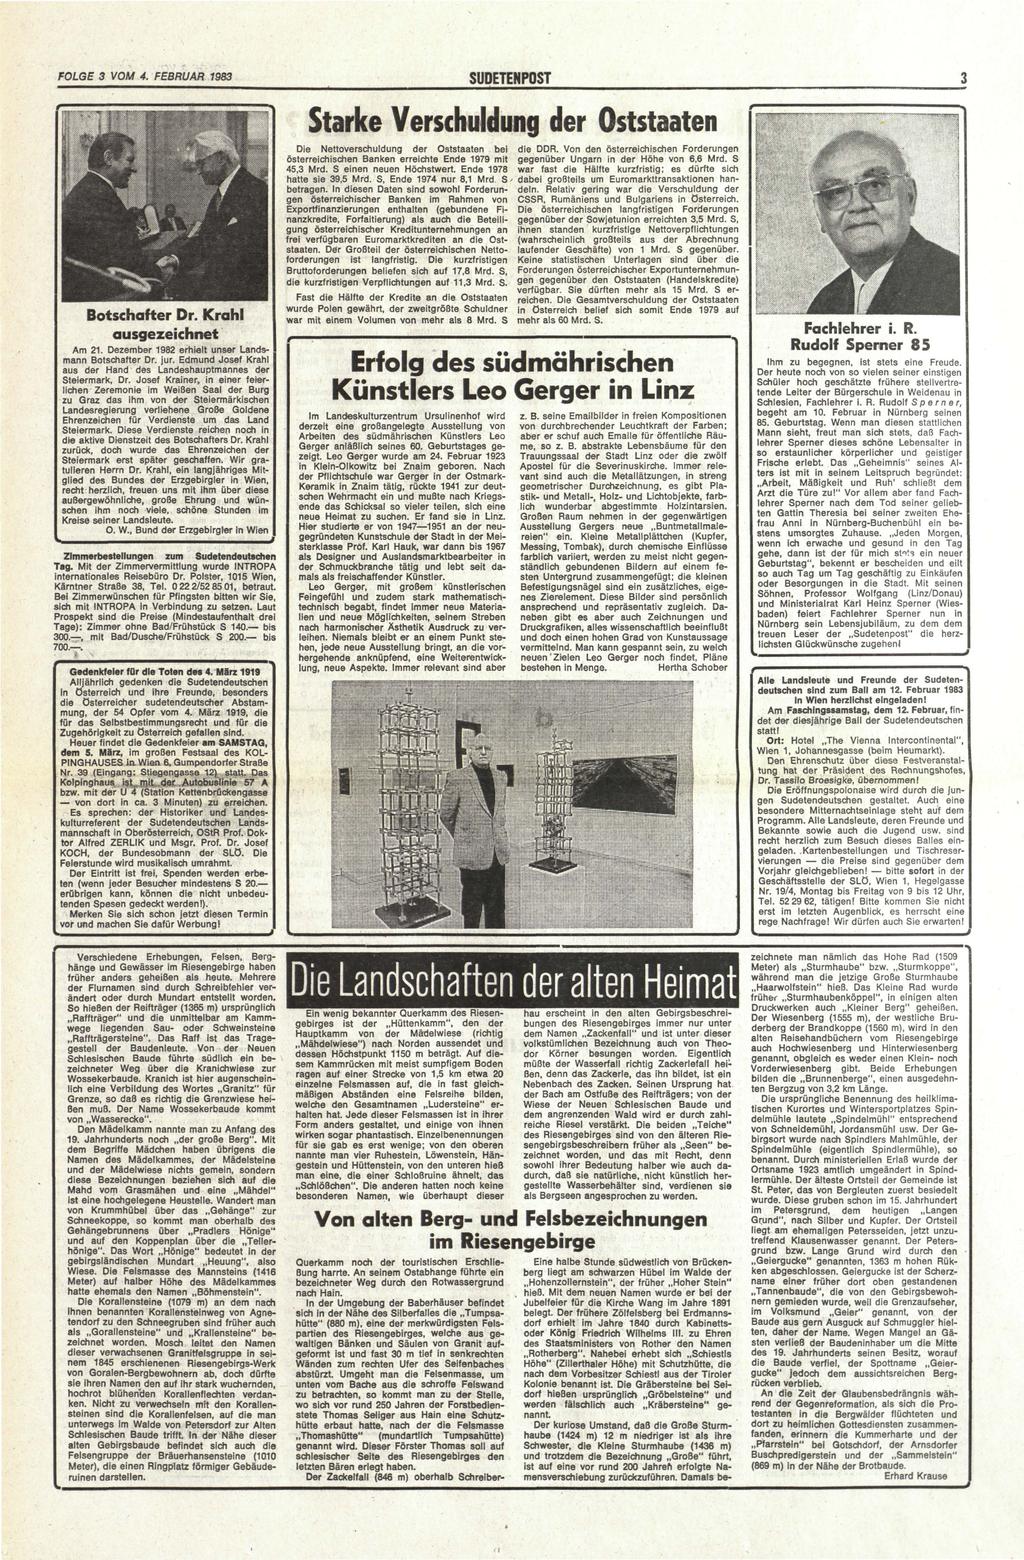 SUDETENPOST Starke Verschuldung der Oststaaten Botschafter Dr. Krahl ausgezeichnet Am 21. Dezember 1982 erhielt unser Landsmann Botschafter Dr. jur.